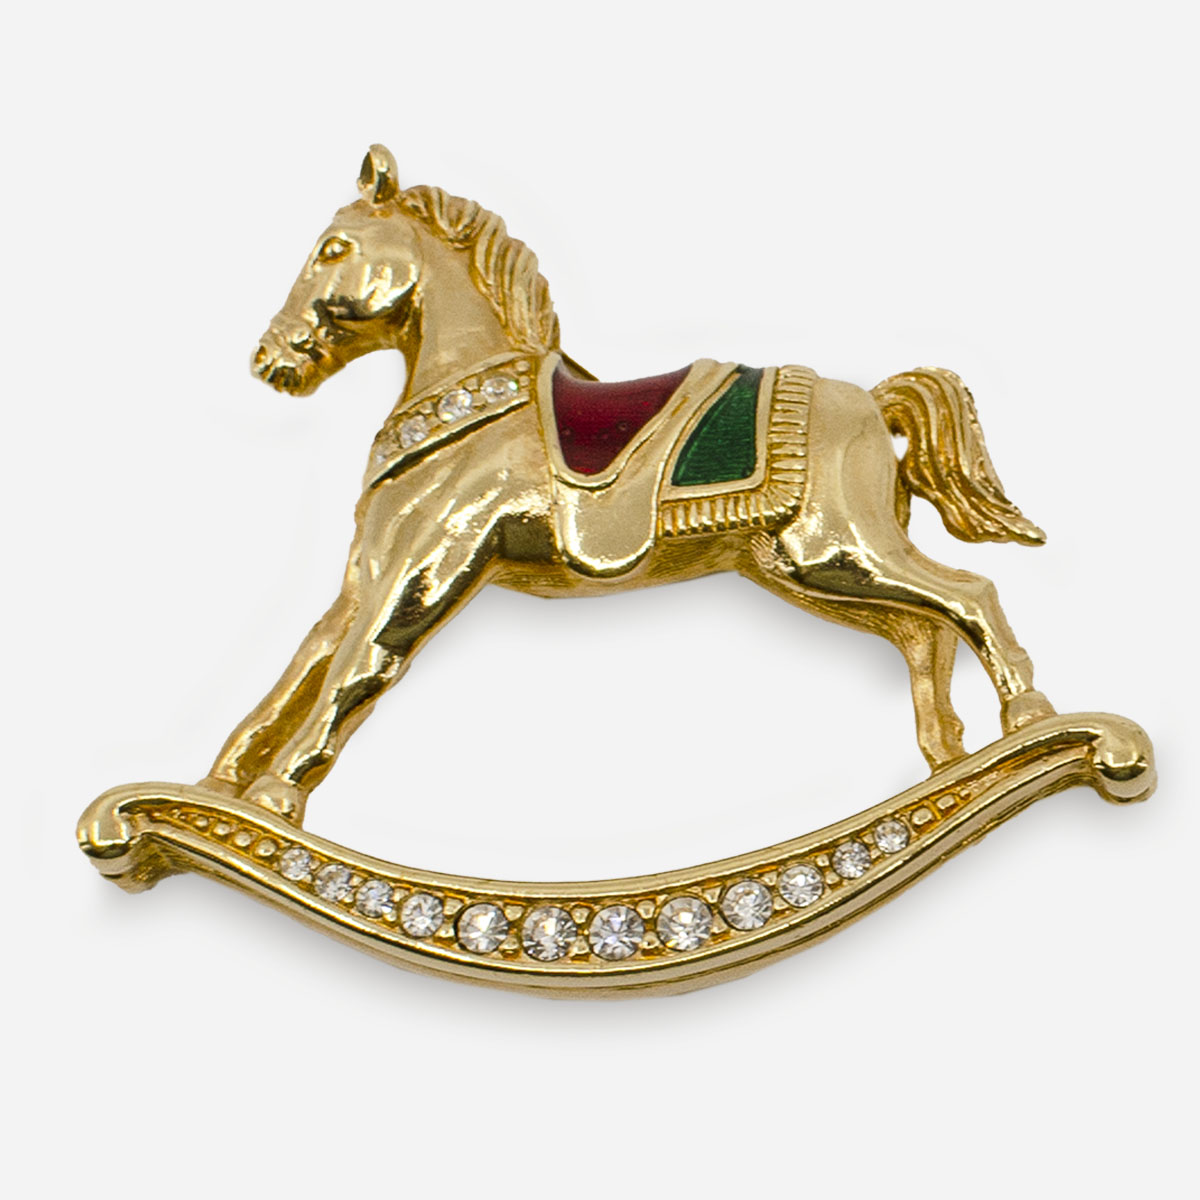 Swarovski Rocking Horse brooch